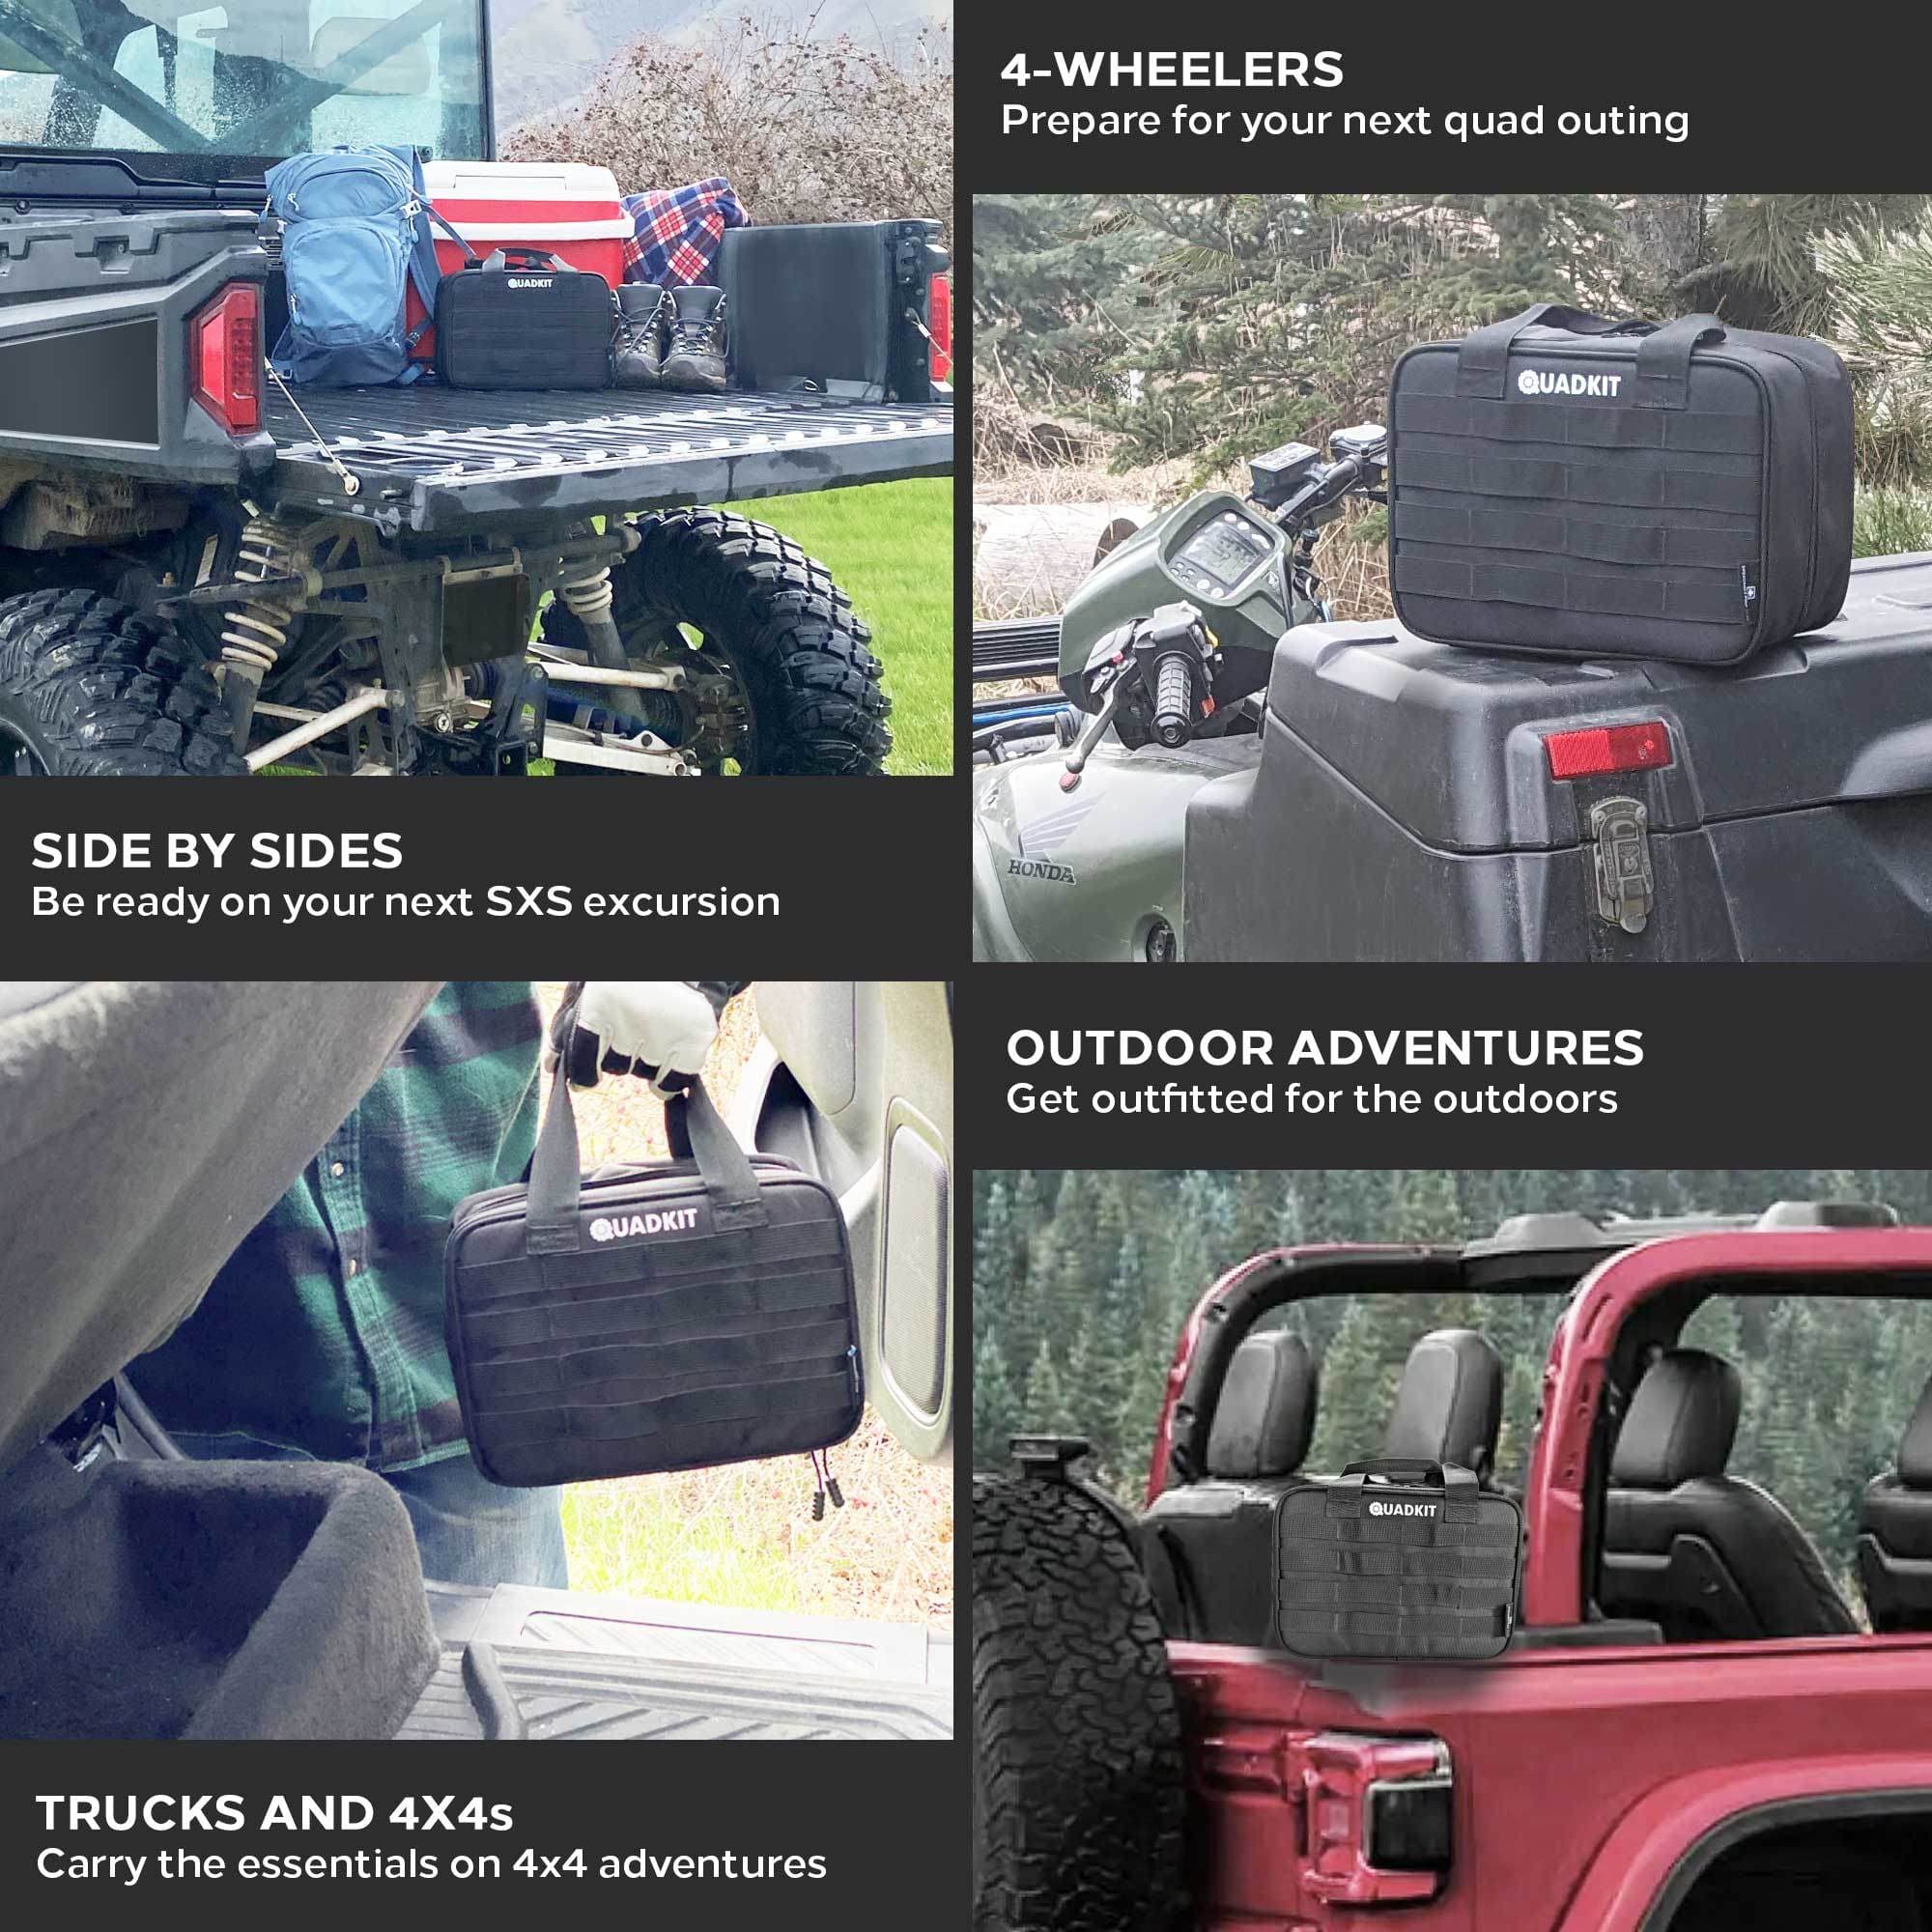 Quadkit ATV Off-Road Emergency Kit 4-in-1 Kit: Auto Kit;  First Aid Kit;  Survival Kit;  Fastener Kit For ATVs, UTVs, SxS